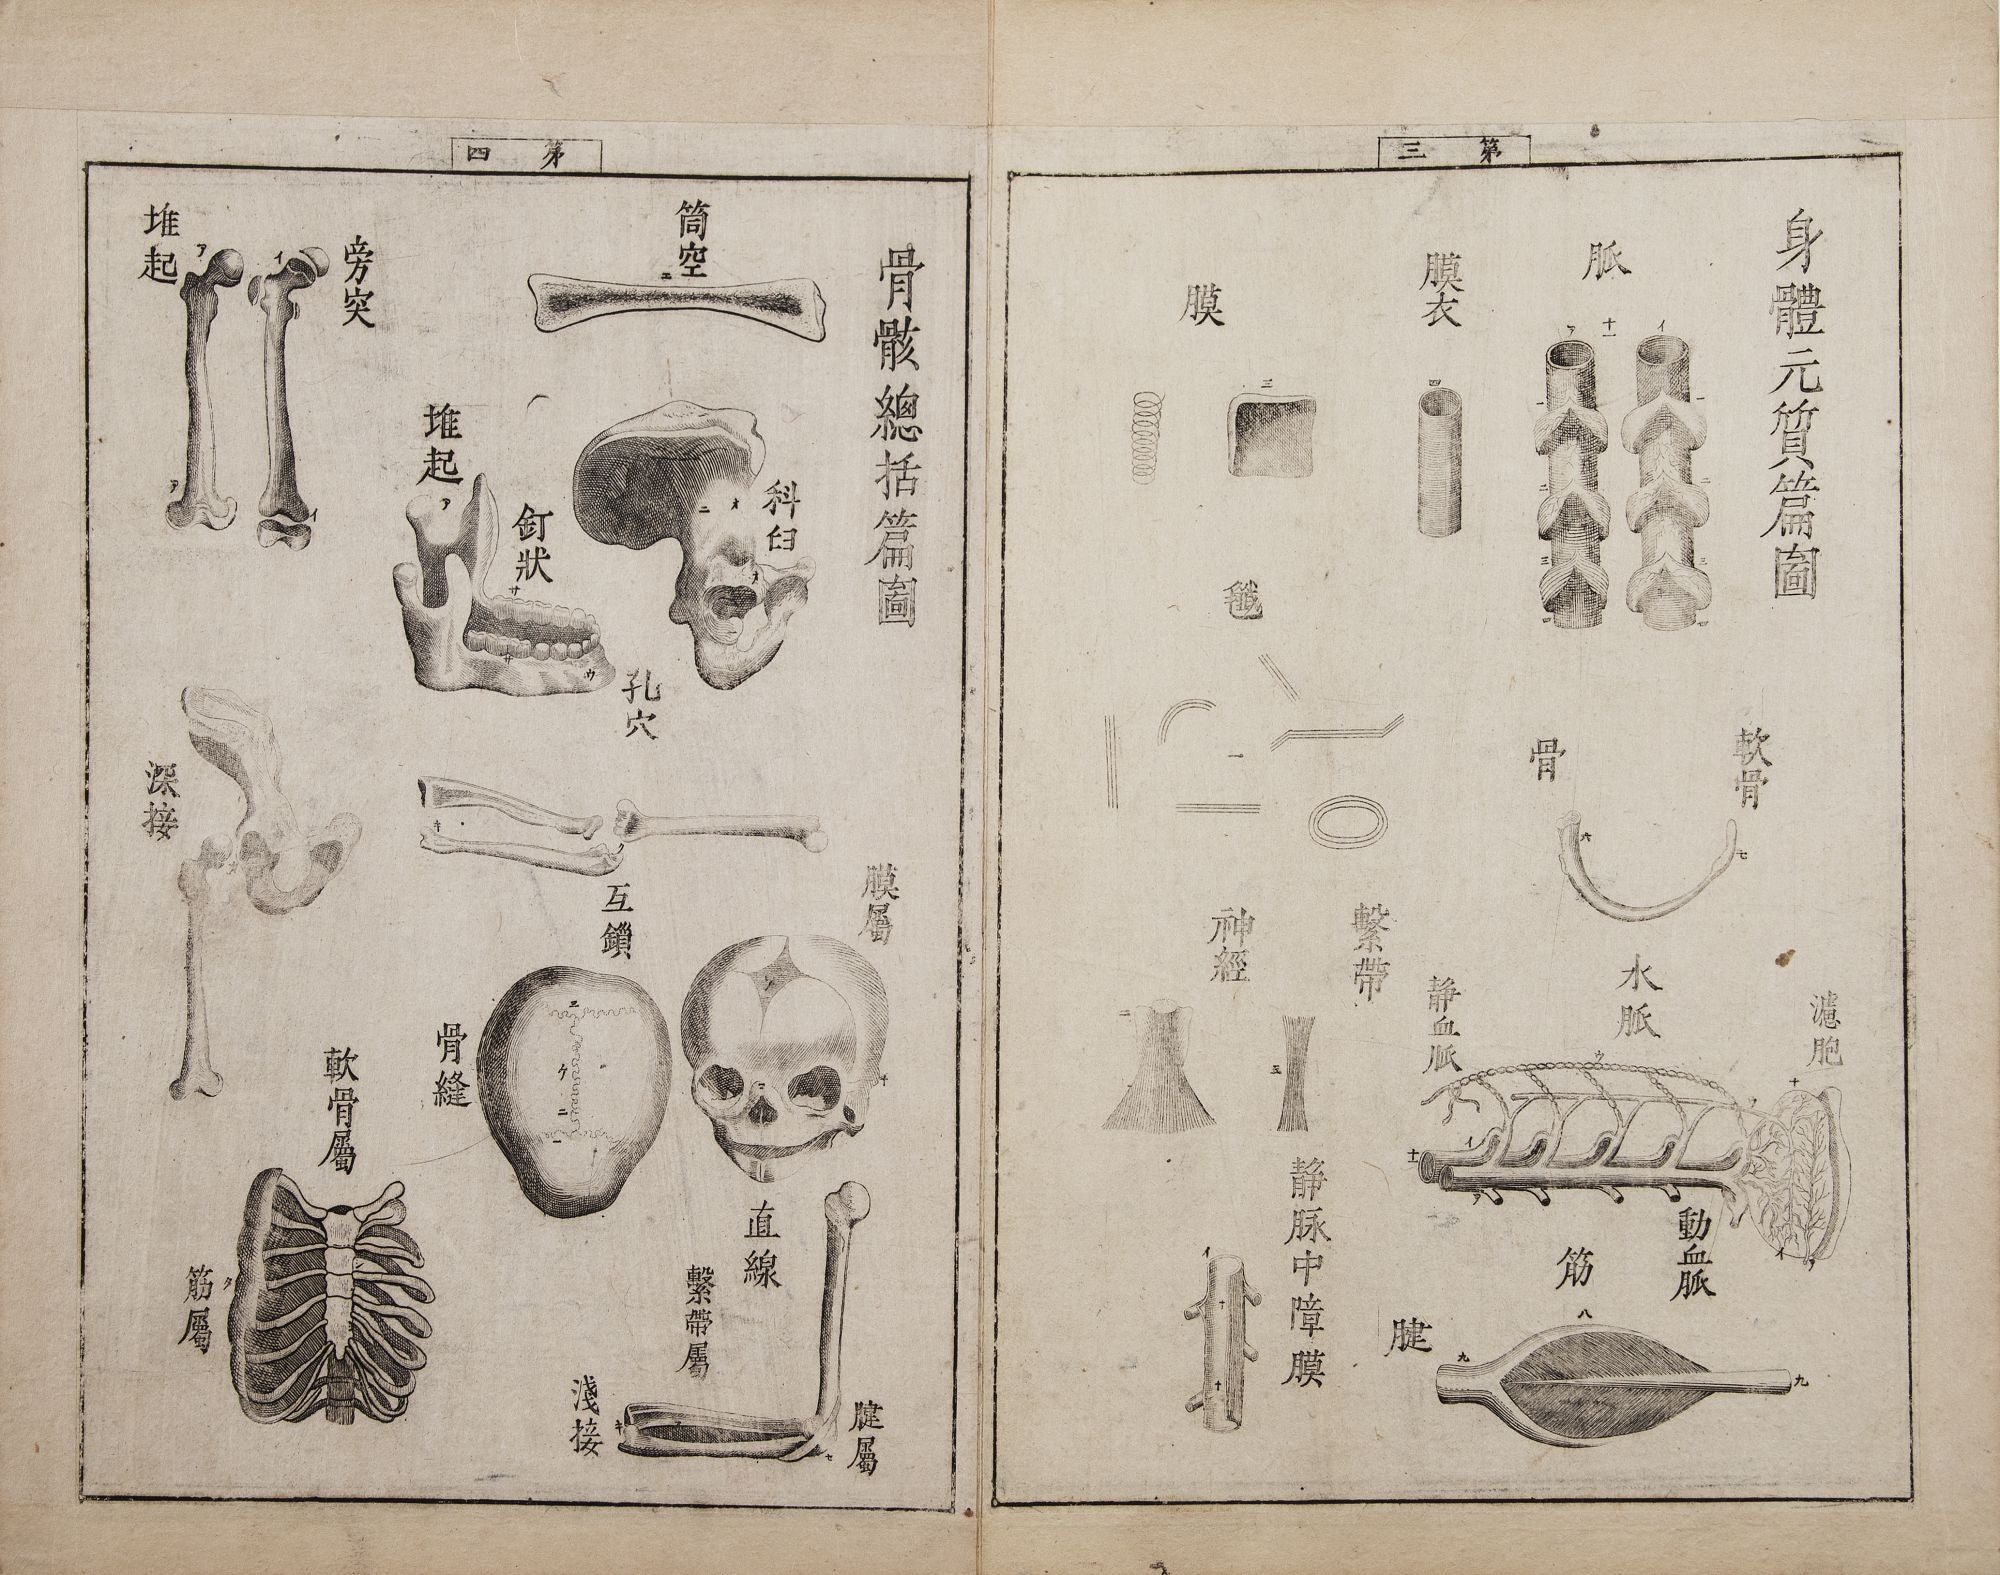 Jūtei kaitai shinsho 重訂解體新書 Revised Edition of a New Book of Anatomy by  Genpaku 杉田玄白 SUGITA on JONATHAN A. HILL, BOOKSELLER, INC